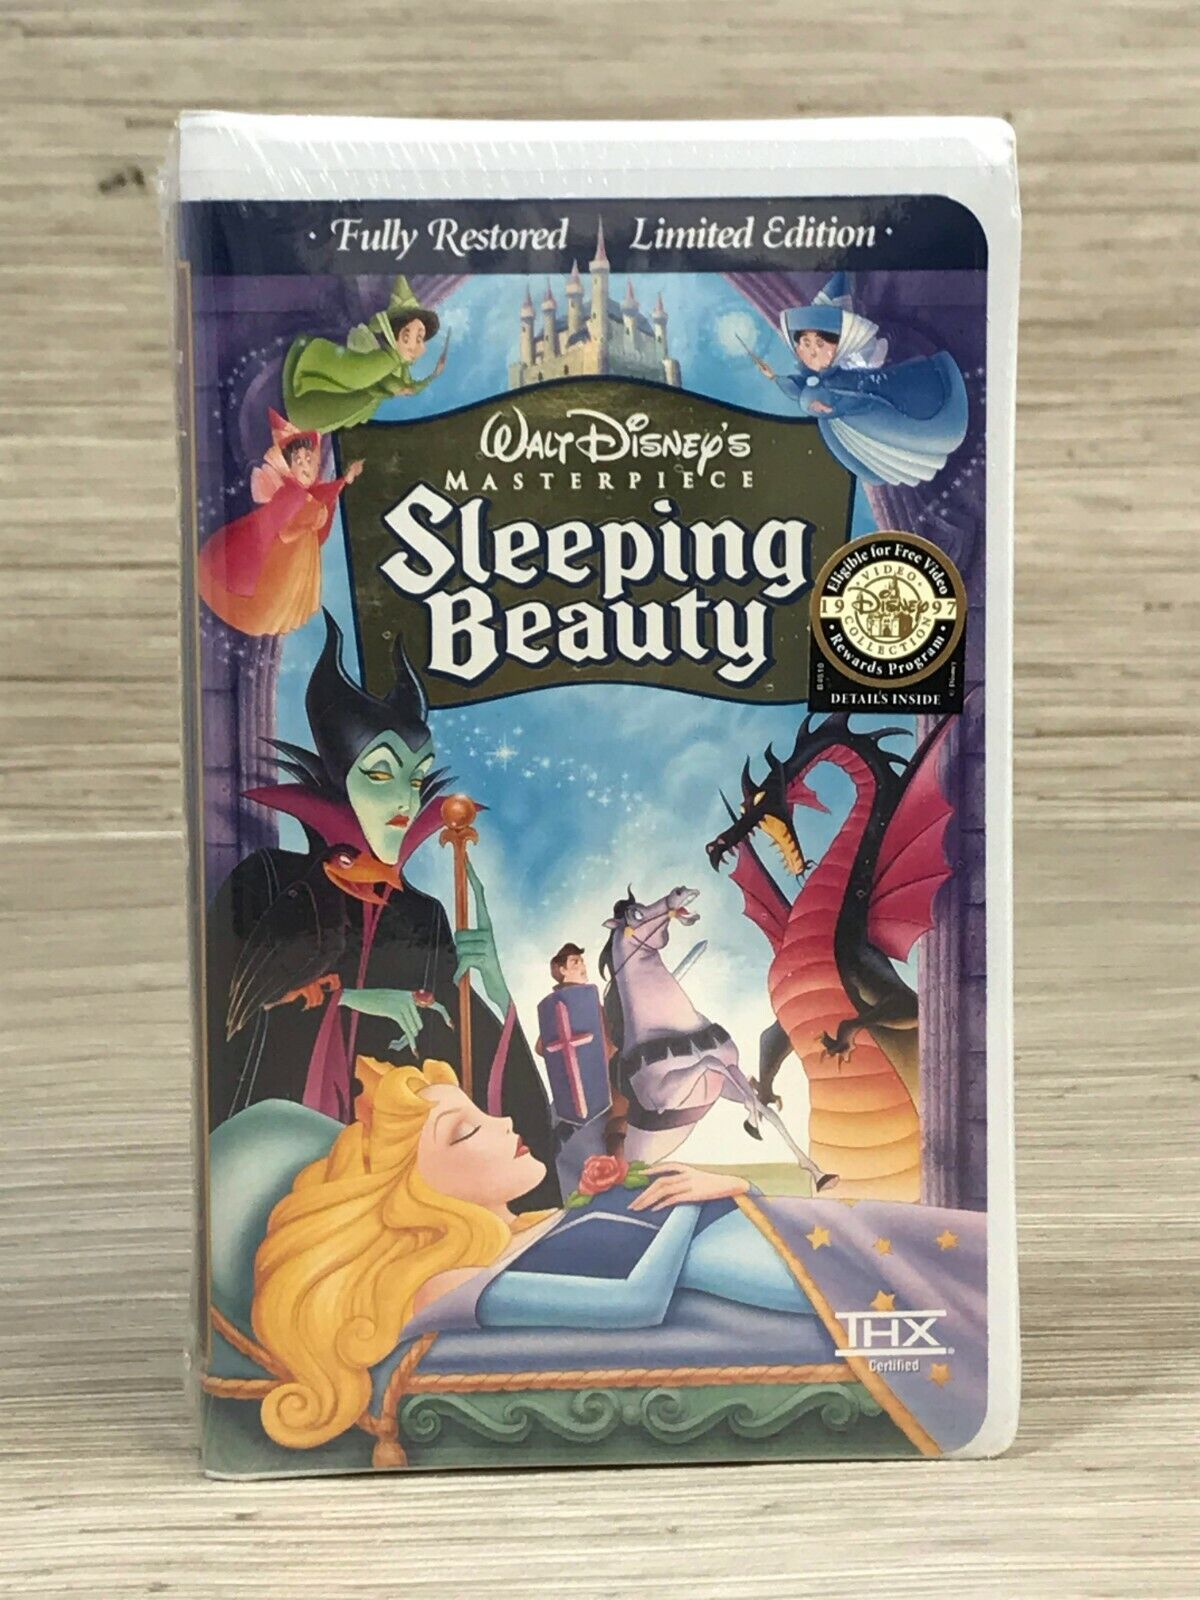 Walt Disney Masterpiece Sleeping Beauty VHS Fully Restored Limited Edition 1997